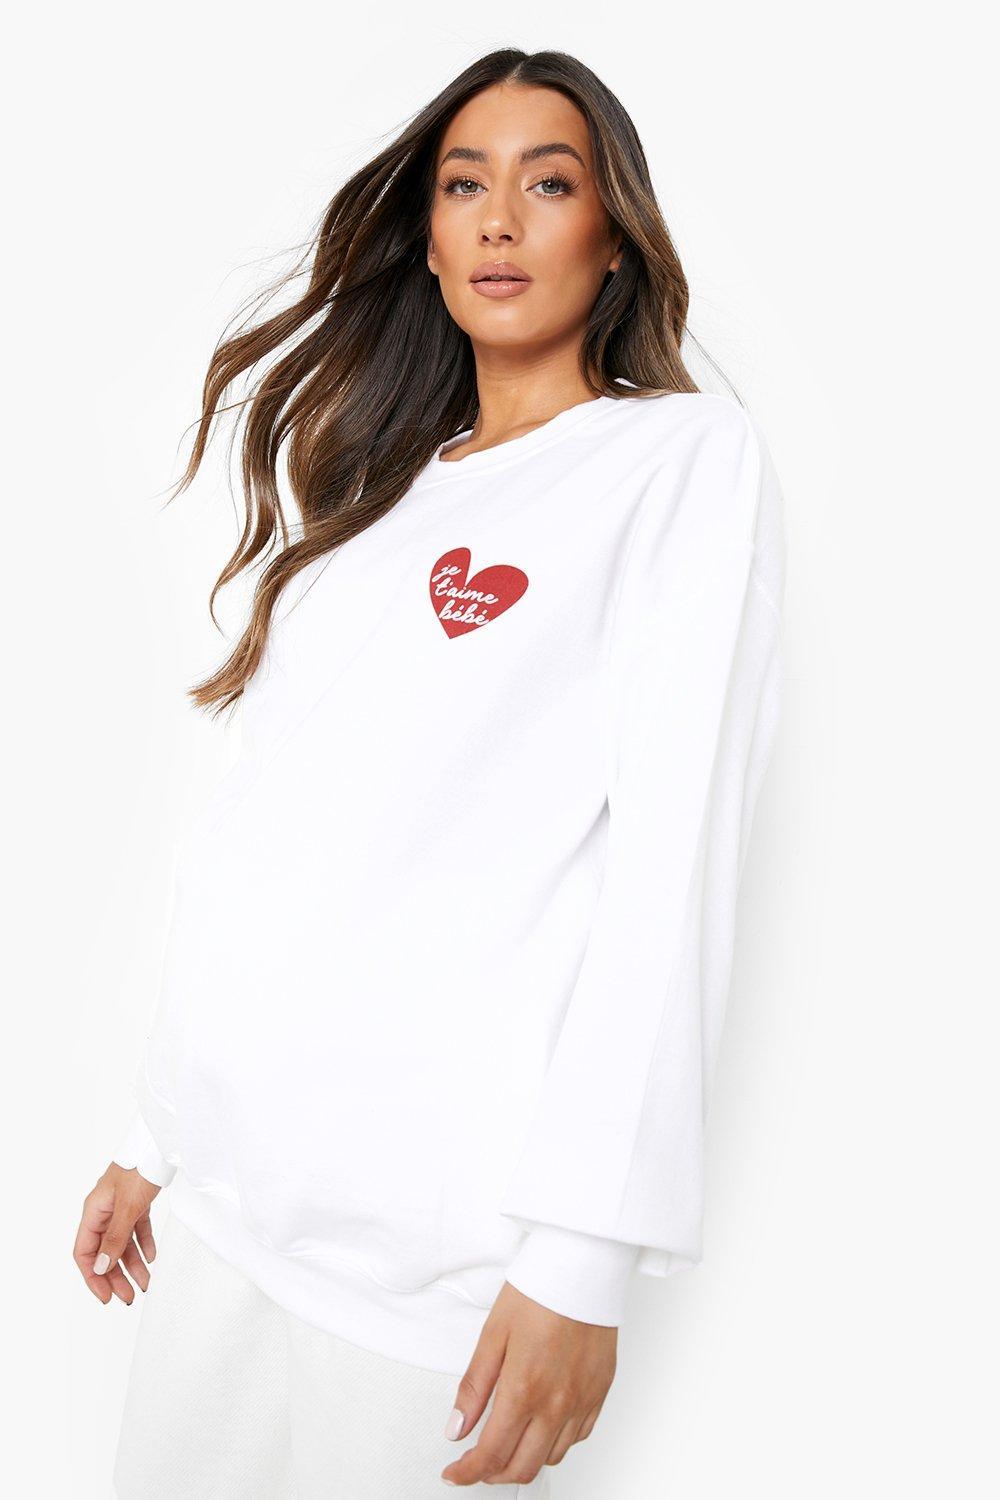 Boohoo Maternity 'je Taime Bebe' Sweatshirt in White - Lyst